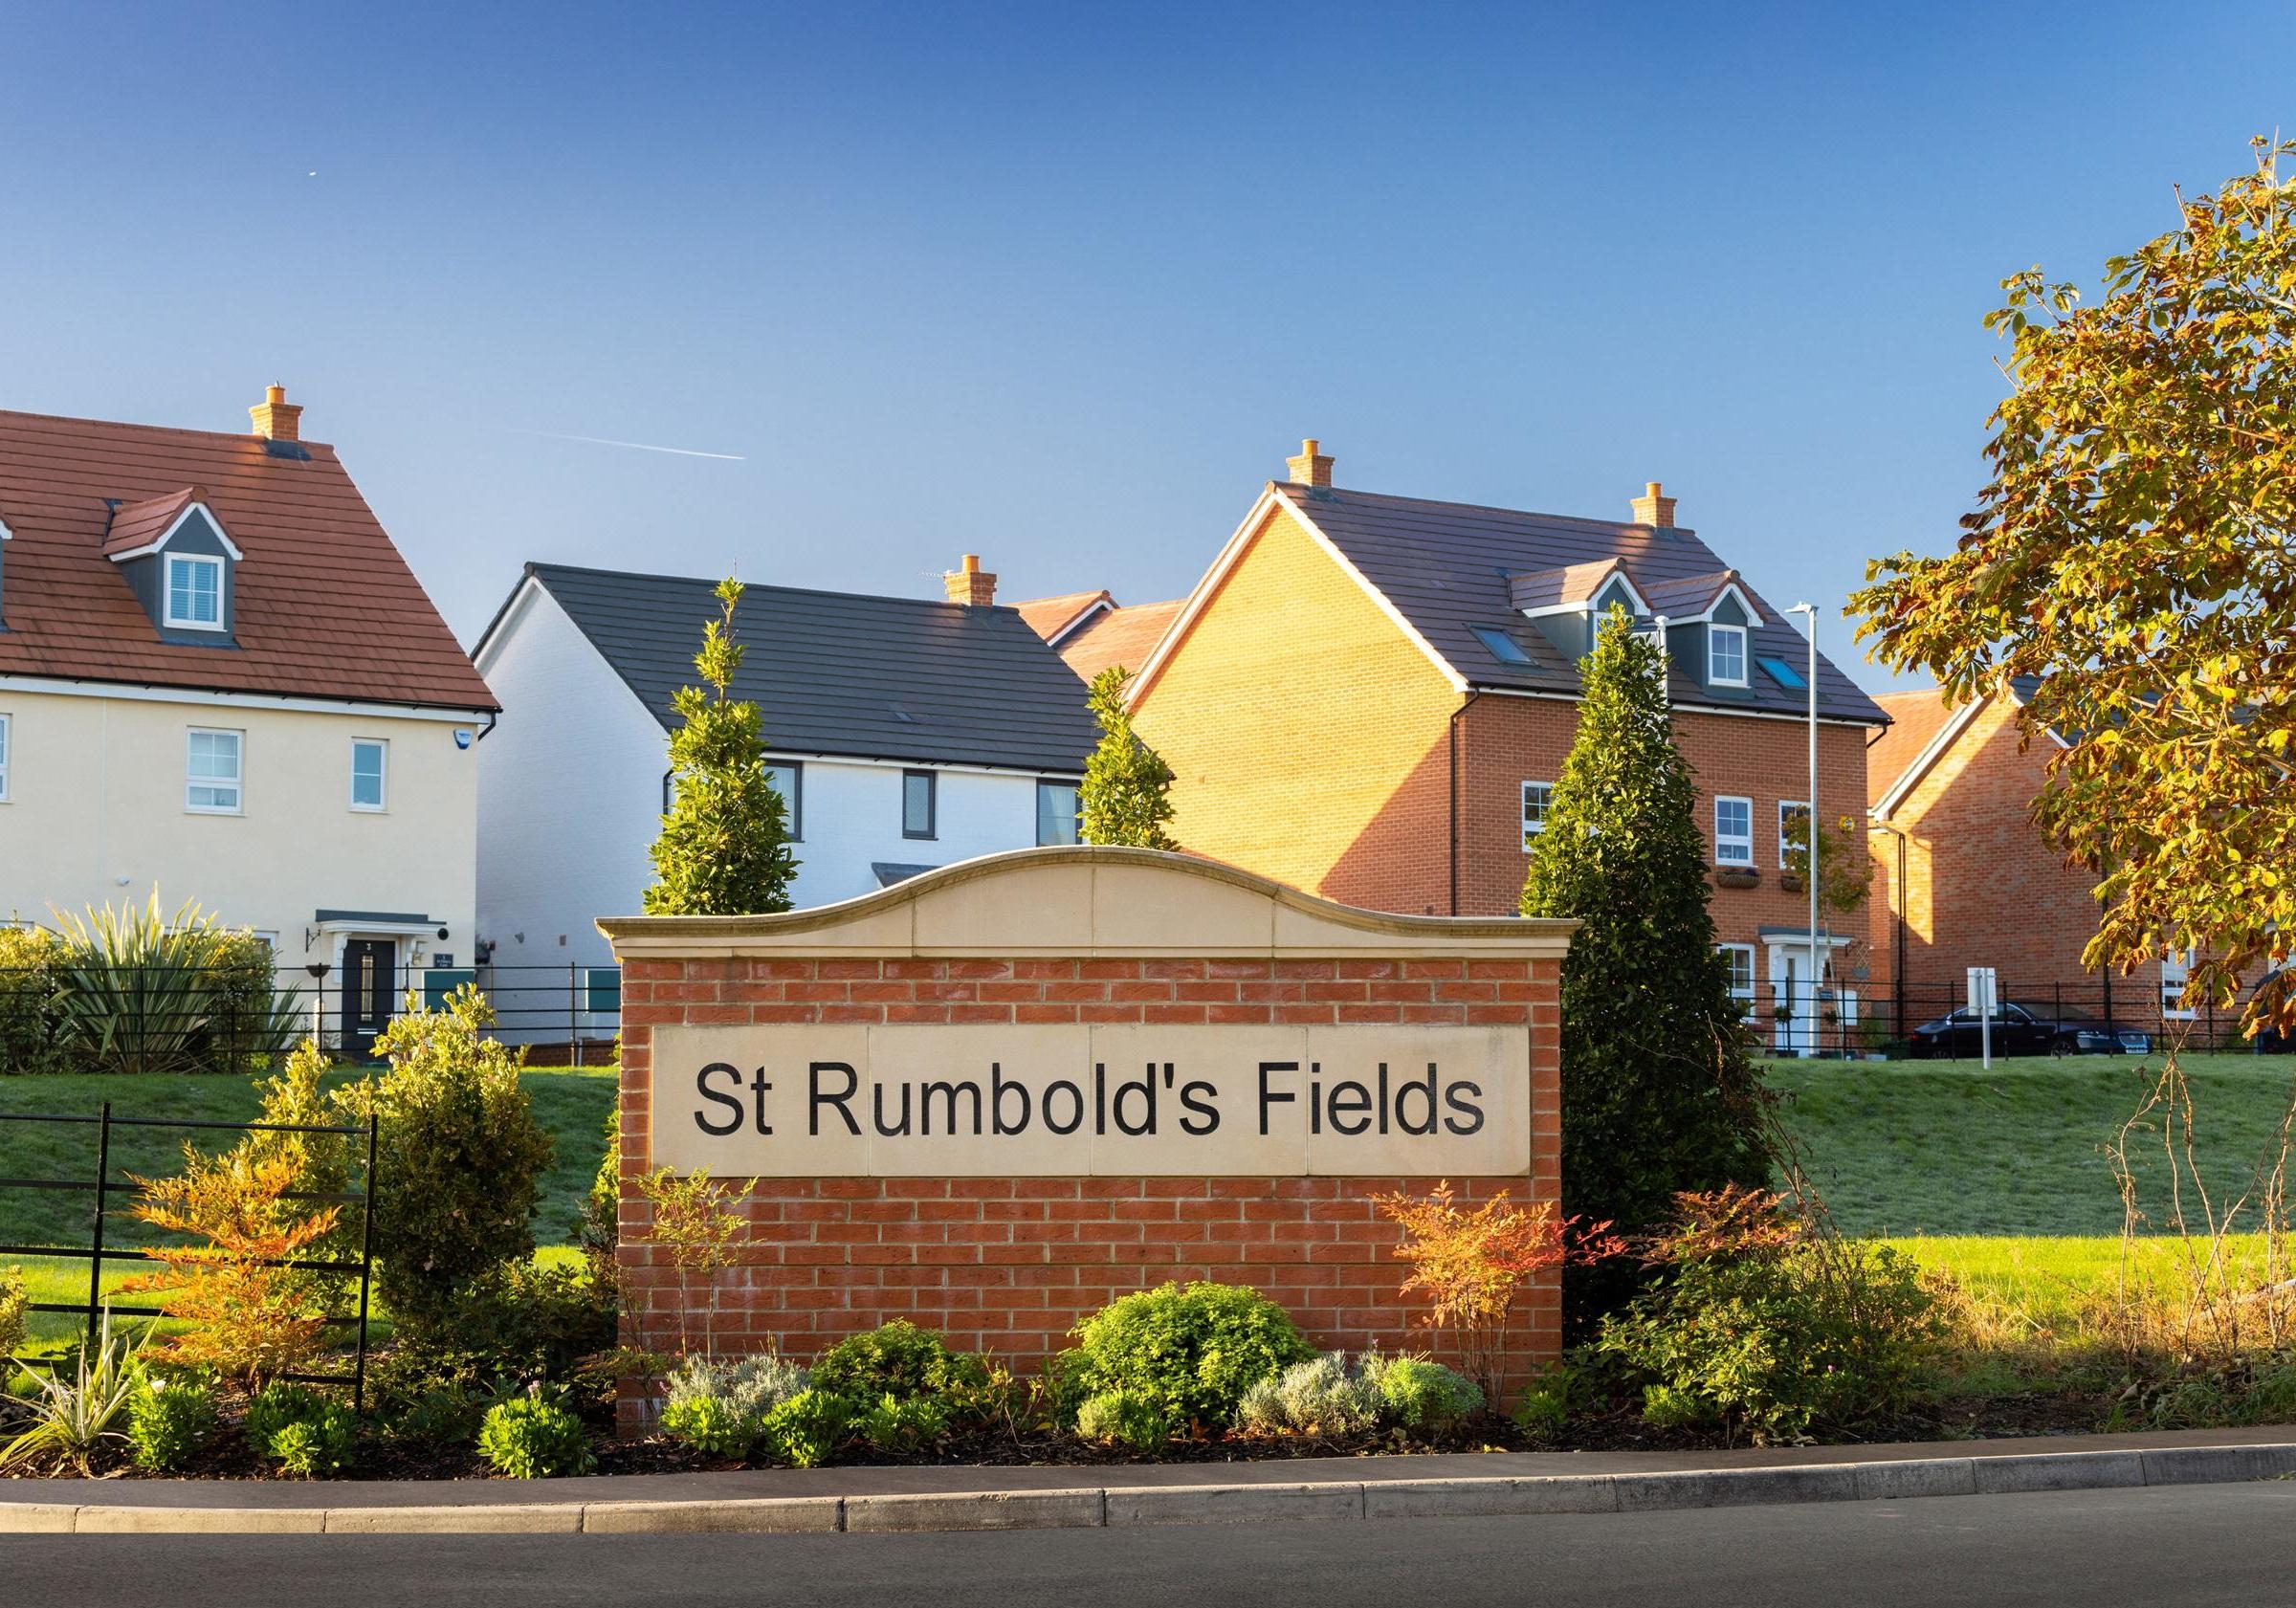 Barratt @ St Rumbold's Fields development 1 of 1